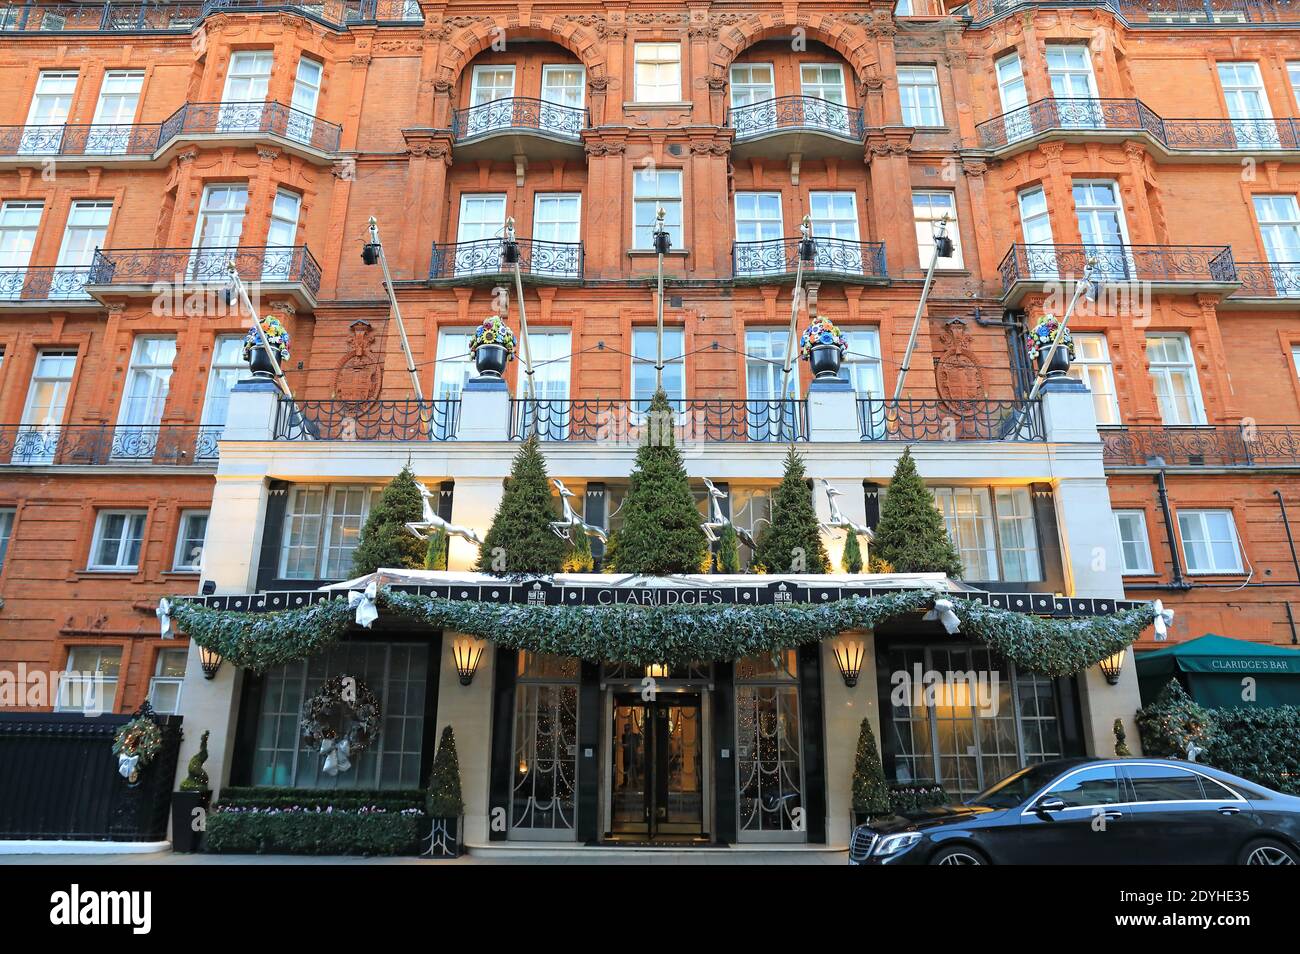 5 Star Hotel in Mayfair, London